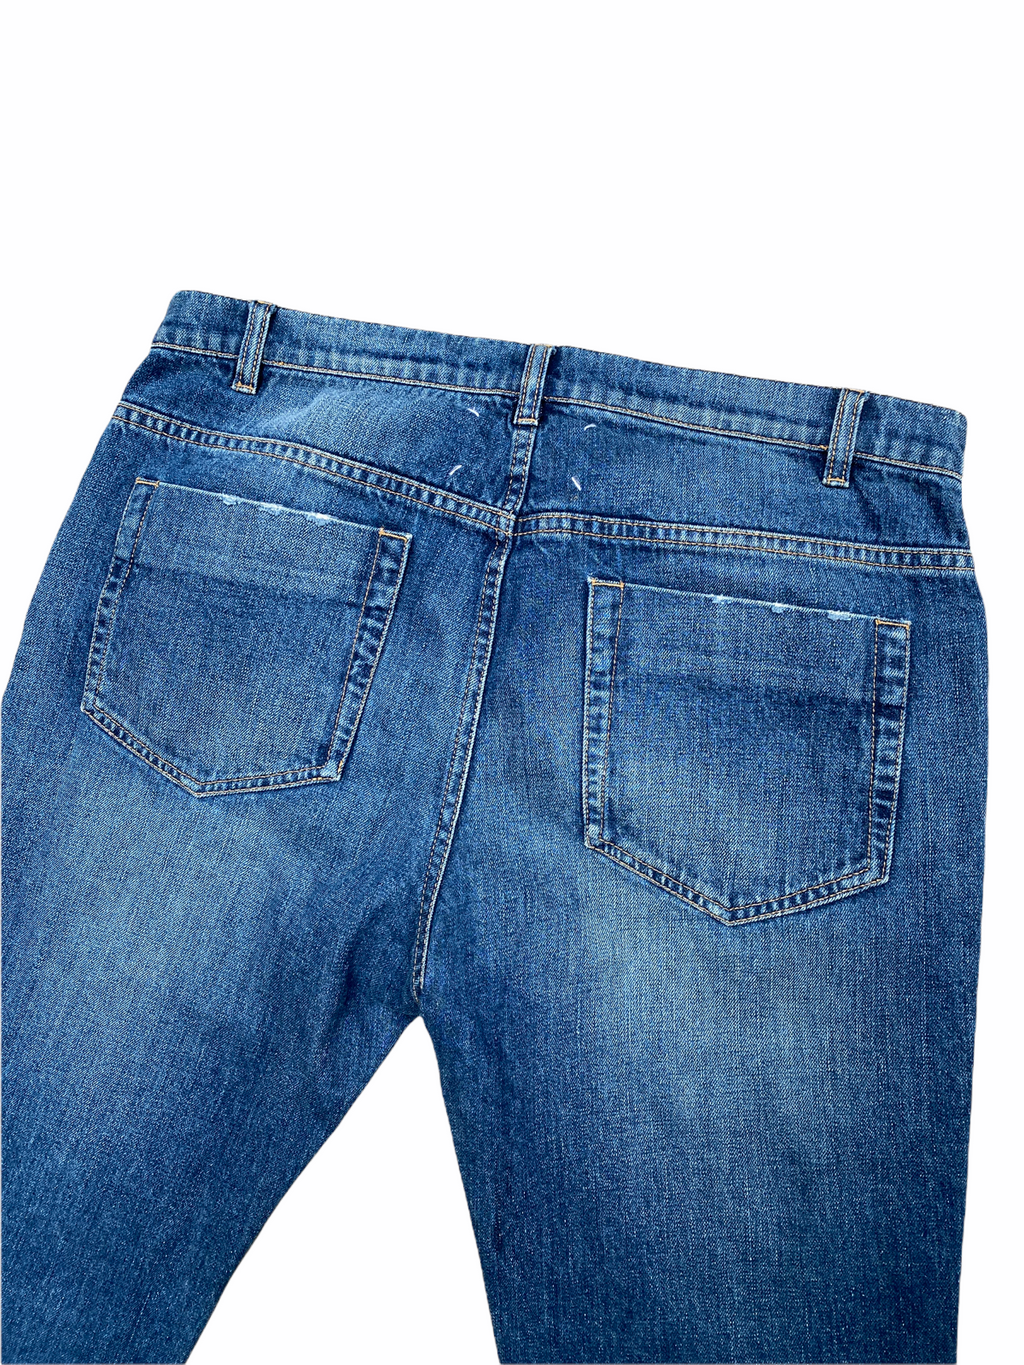 Blue denim jeans Slim Fit  Superb fades Size 48 US 32